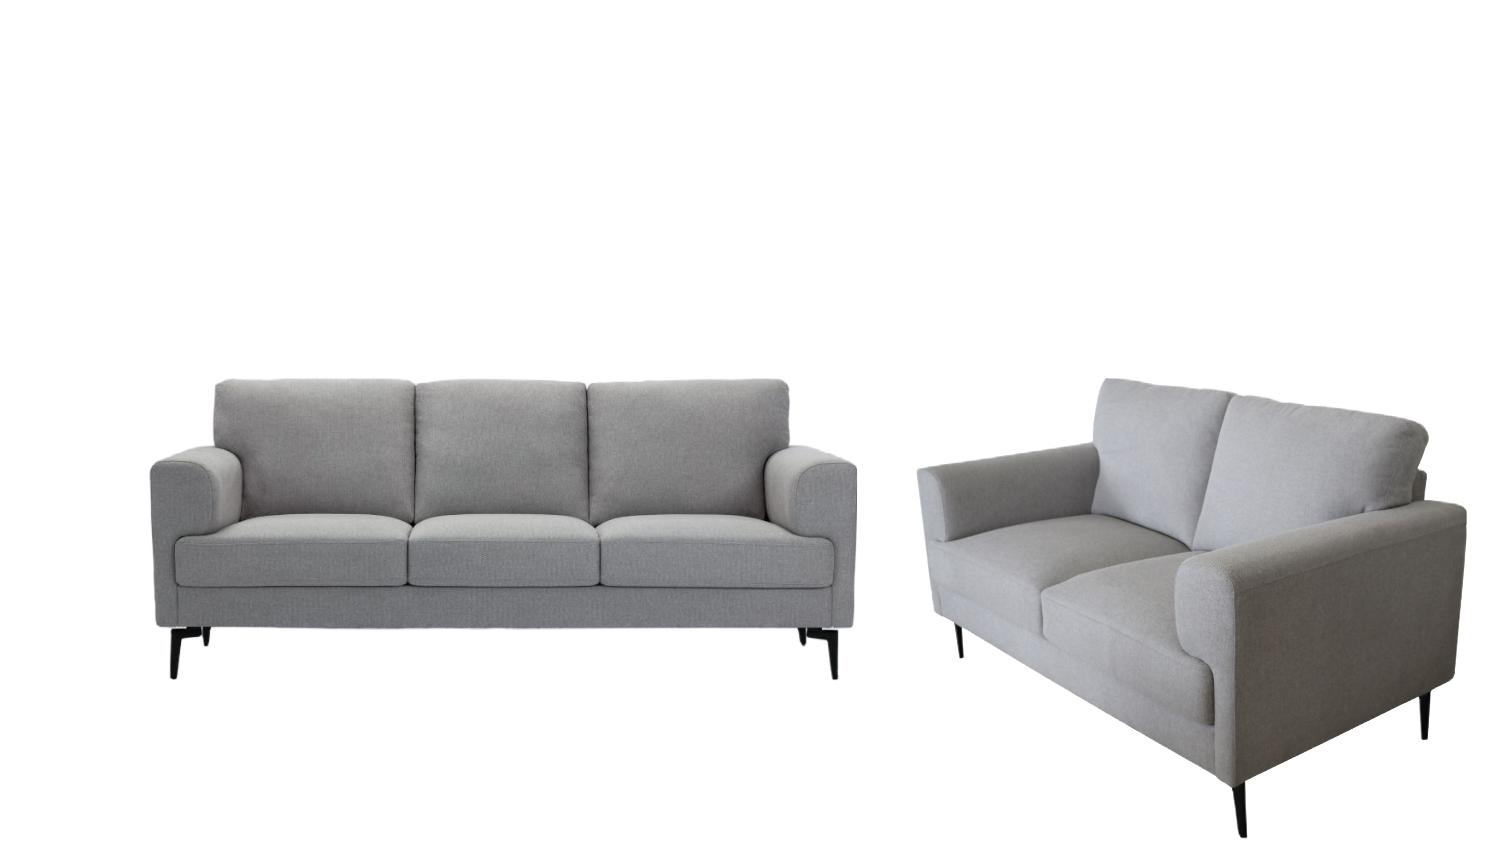 Contemporary, Classic Sofa and Loveseat Set Kyrene 56925-2pcs in Light Gray Linen